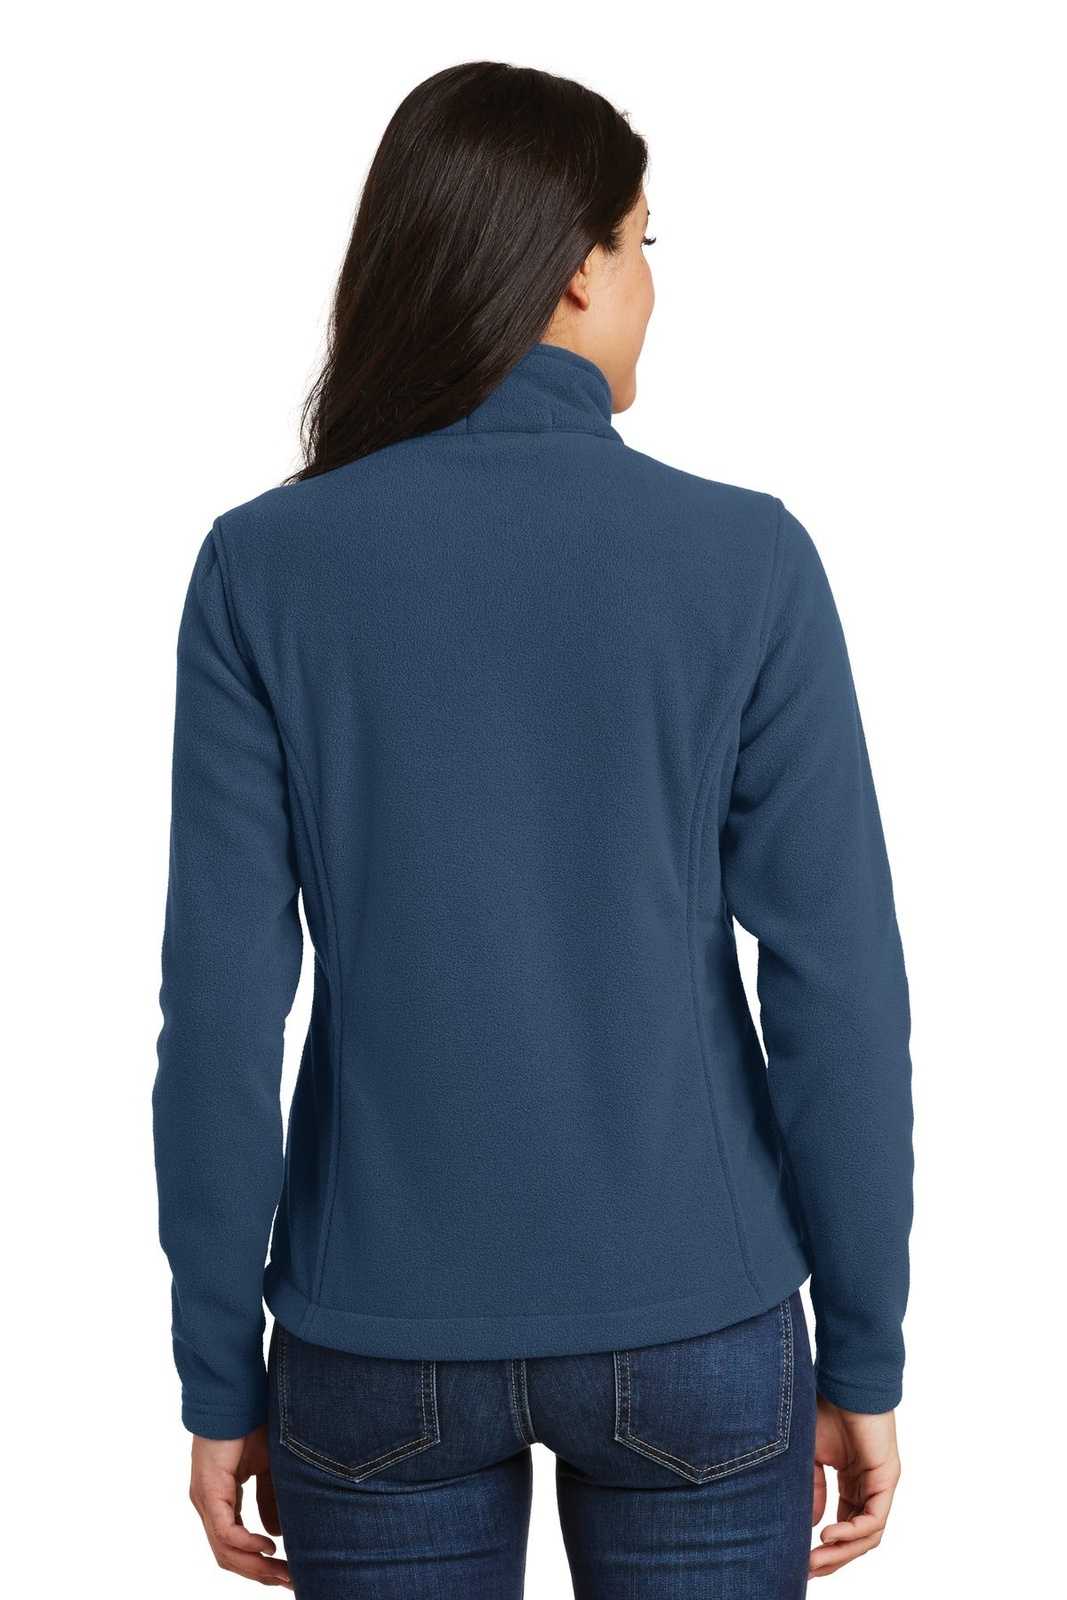 Port Authority L217 Ladies Value Fleece Jacket - Insignia Blue - HIT a Double - 1